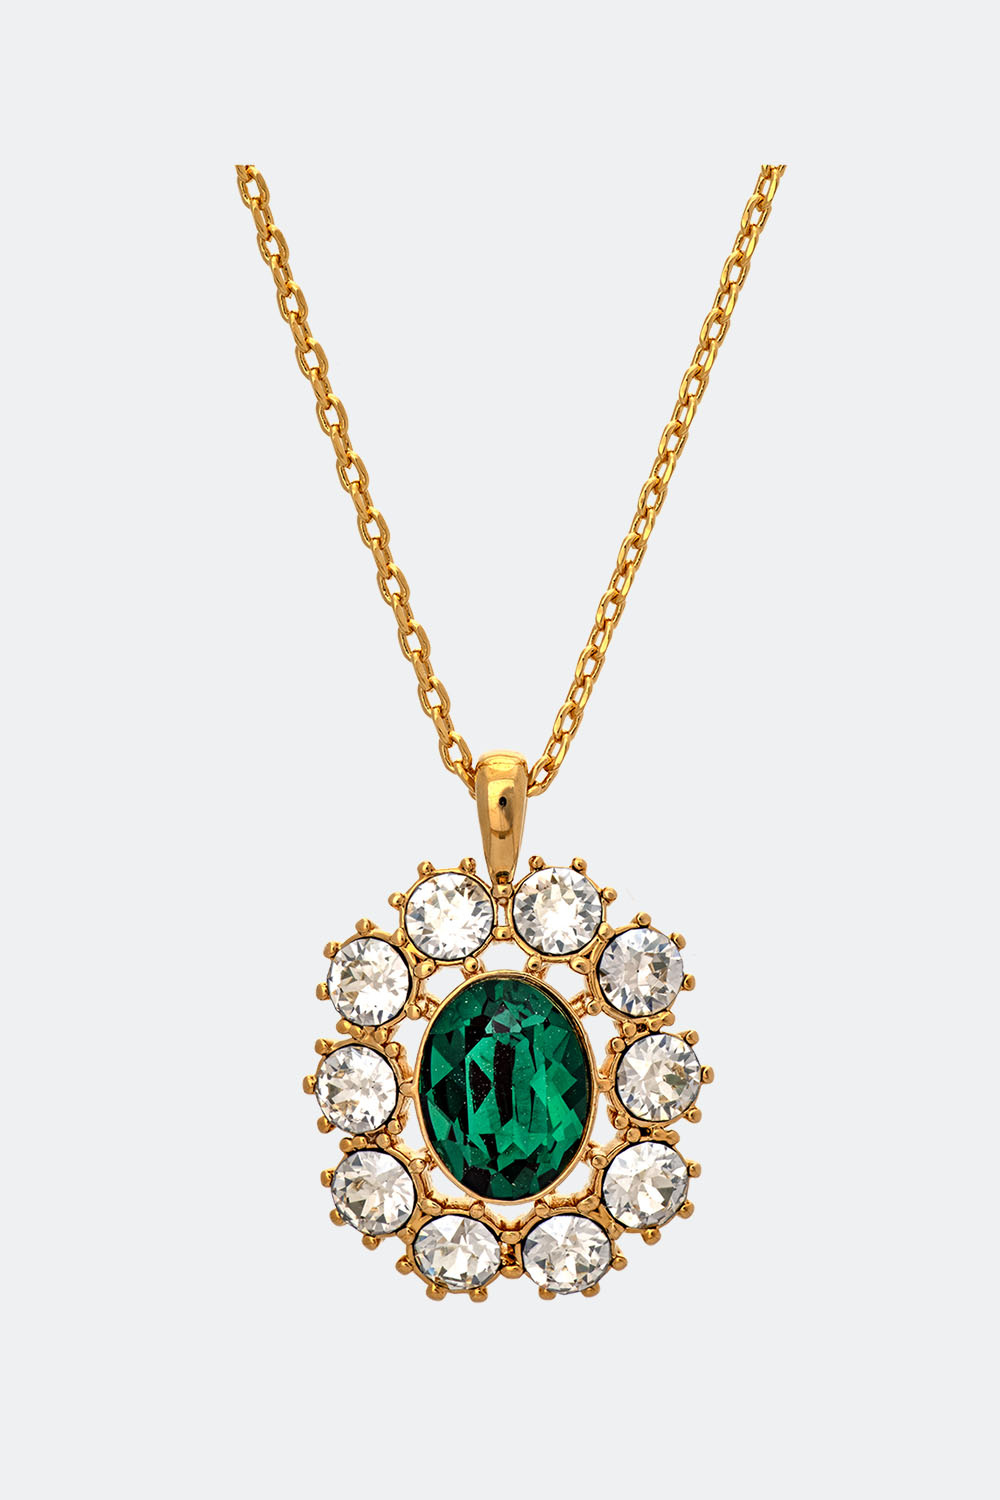 Miss Elizabeth necklace - Emerald